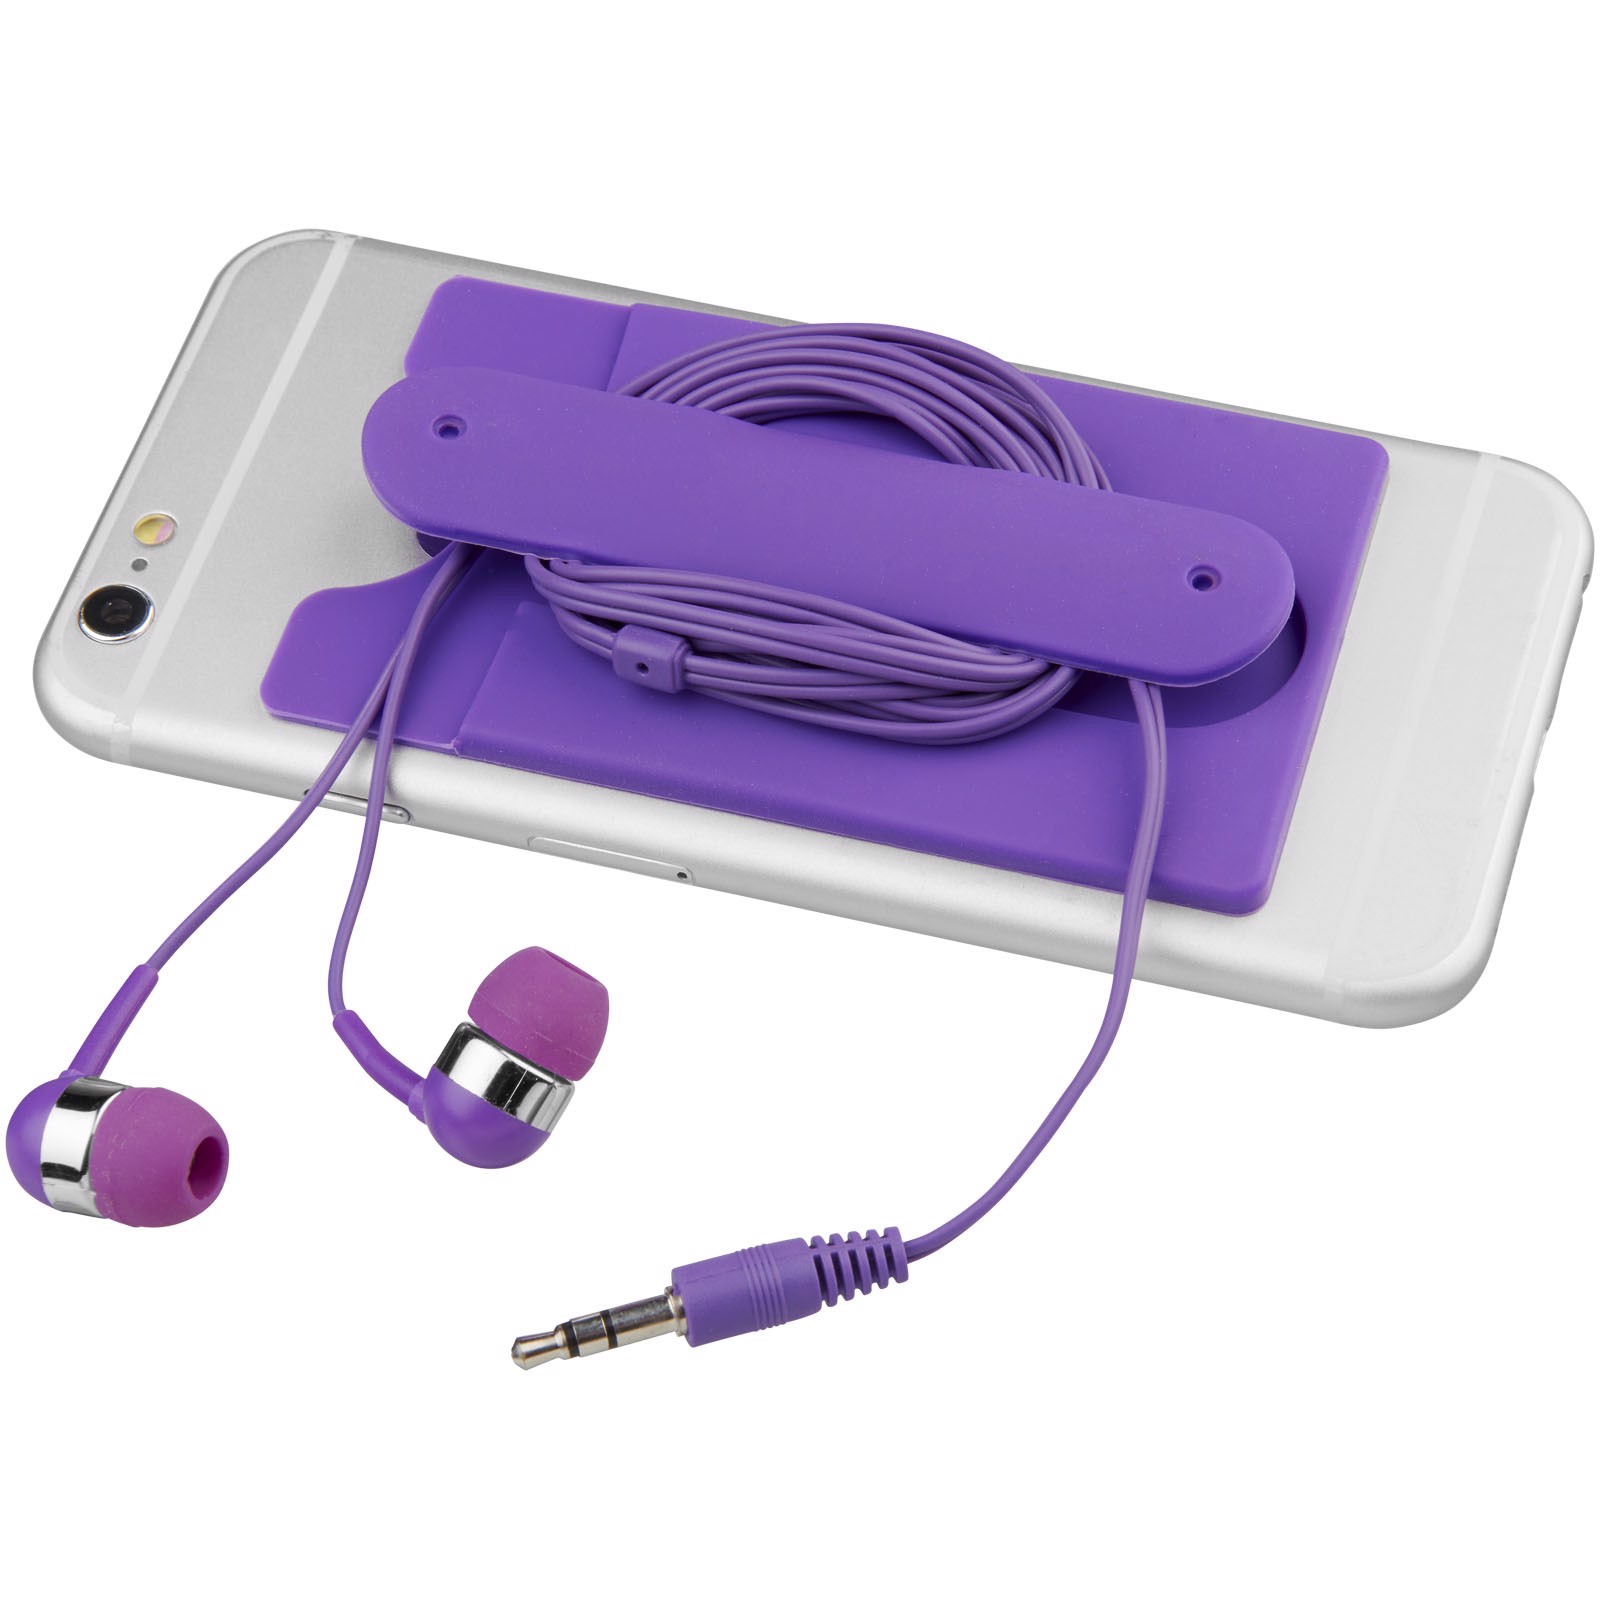 Sluchátka s kabelem a silikonové pouzdro na telefon - Purpurová